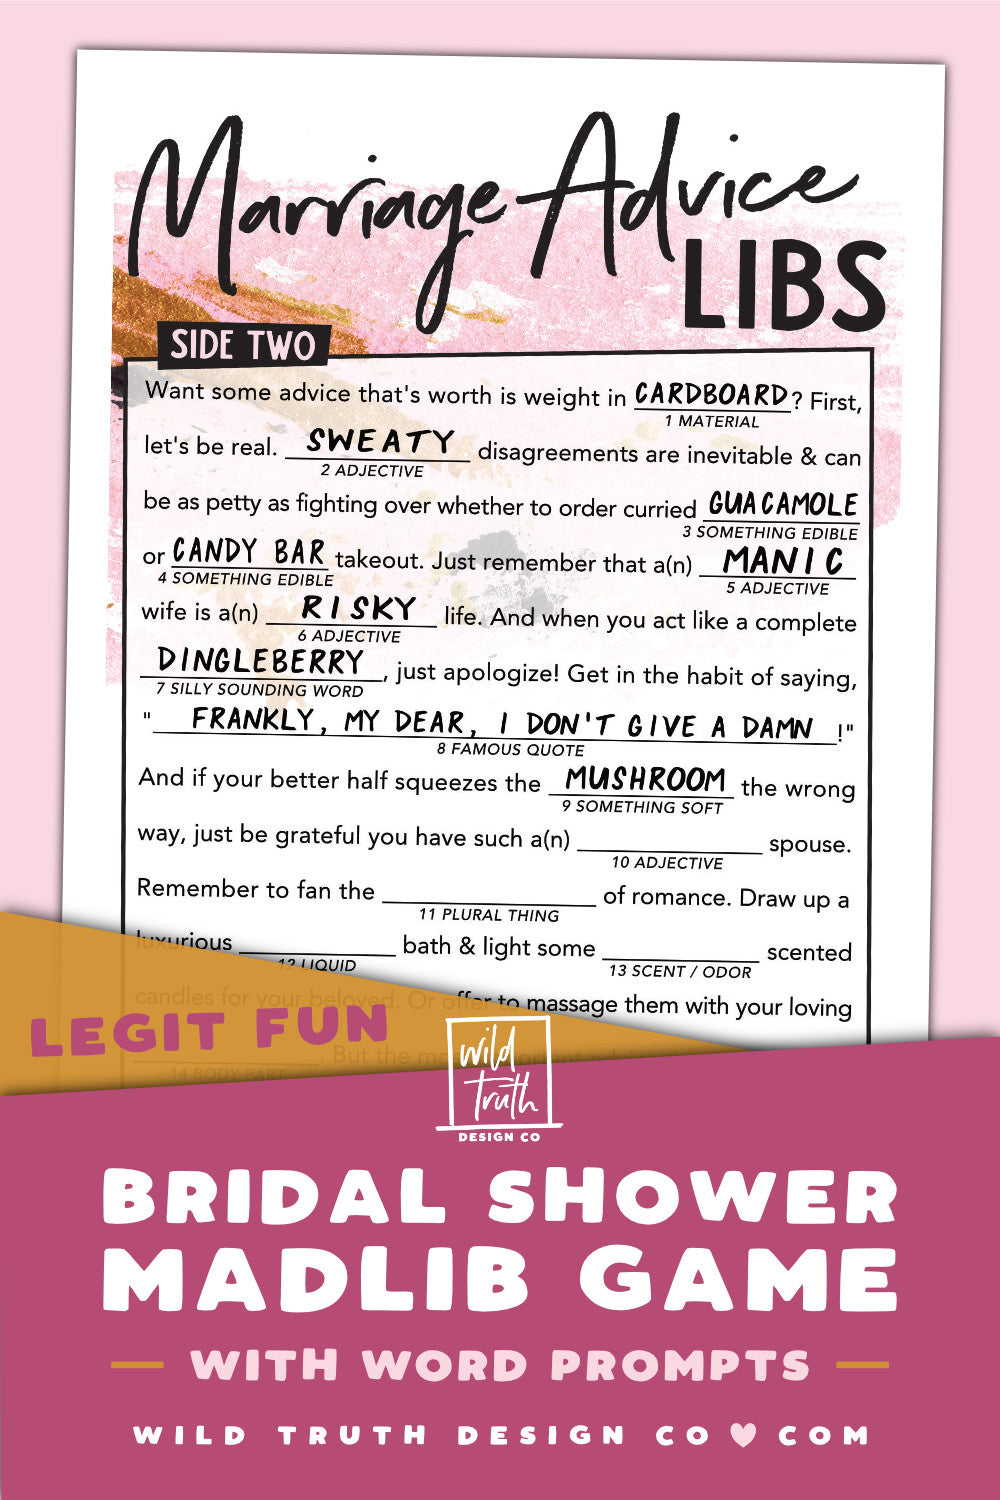 Fun Bridal Shower Madlib Game - Marriage Advice